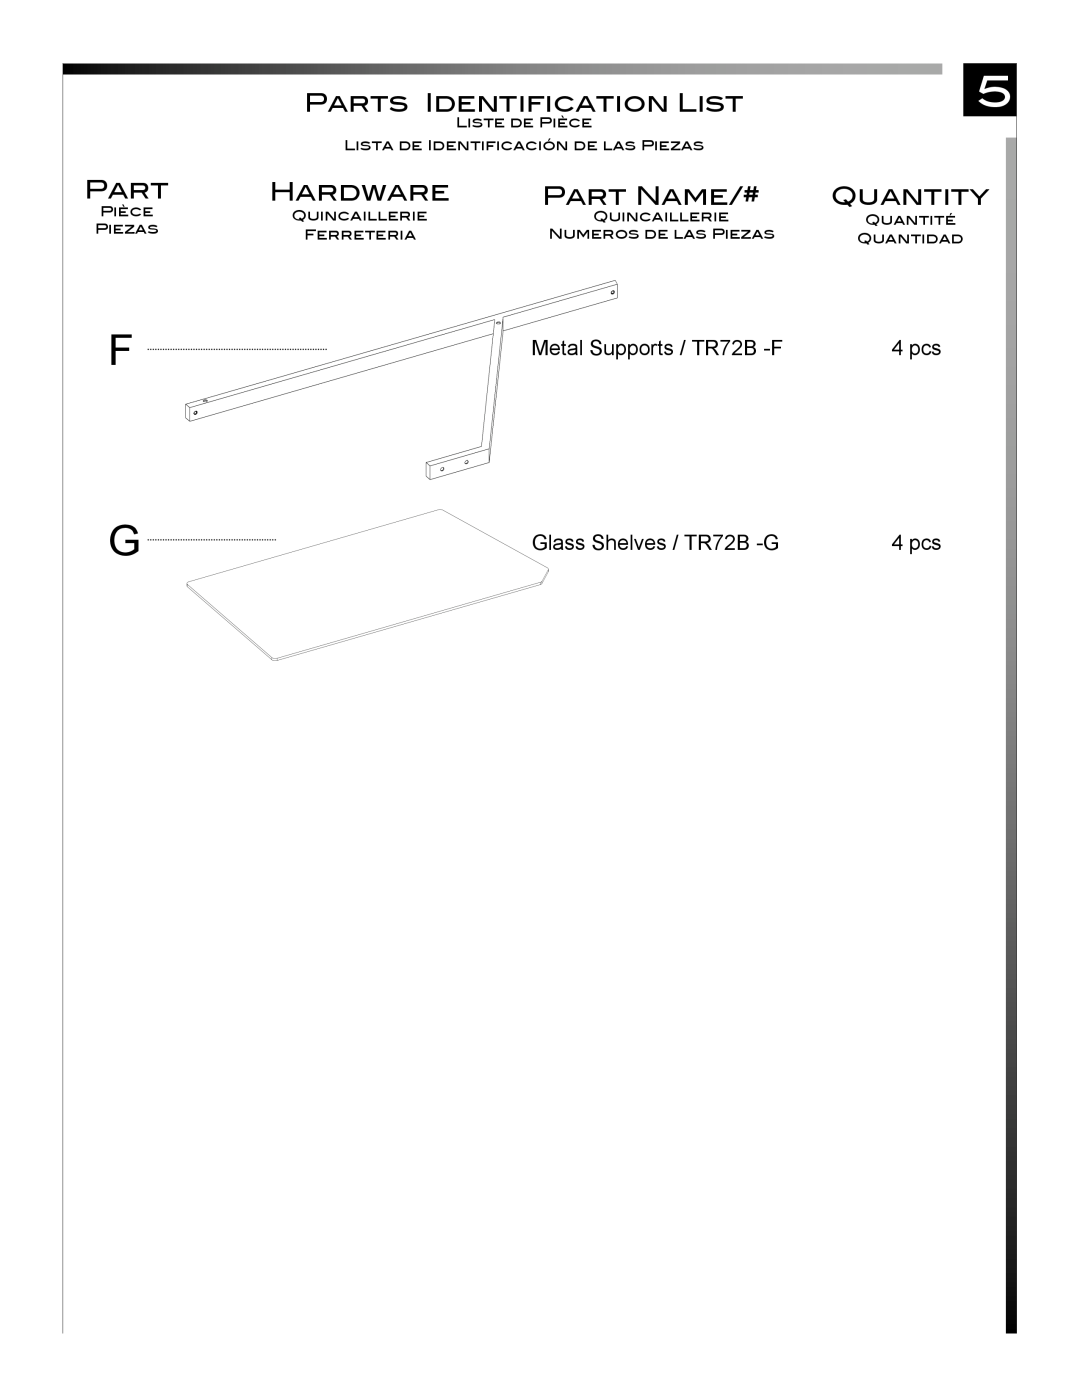 Pinnacle Design Metal Supports / TR72B -F, Glass Shelves / TR72B -G, pcs 4 pcs, Parts Identification List, Hardware 